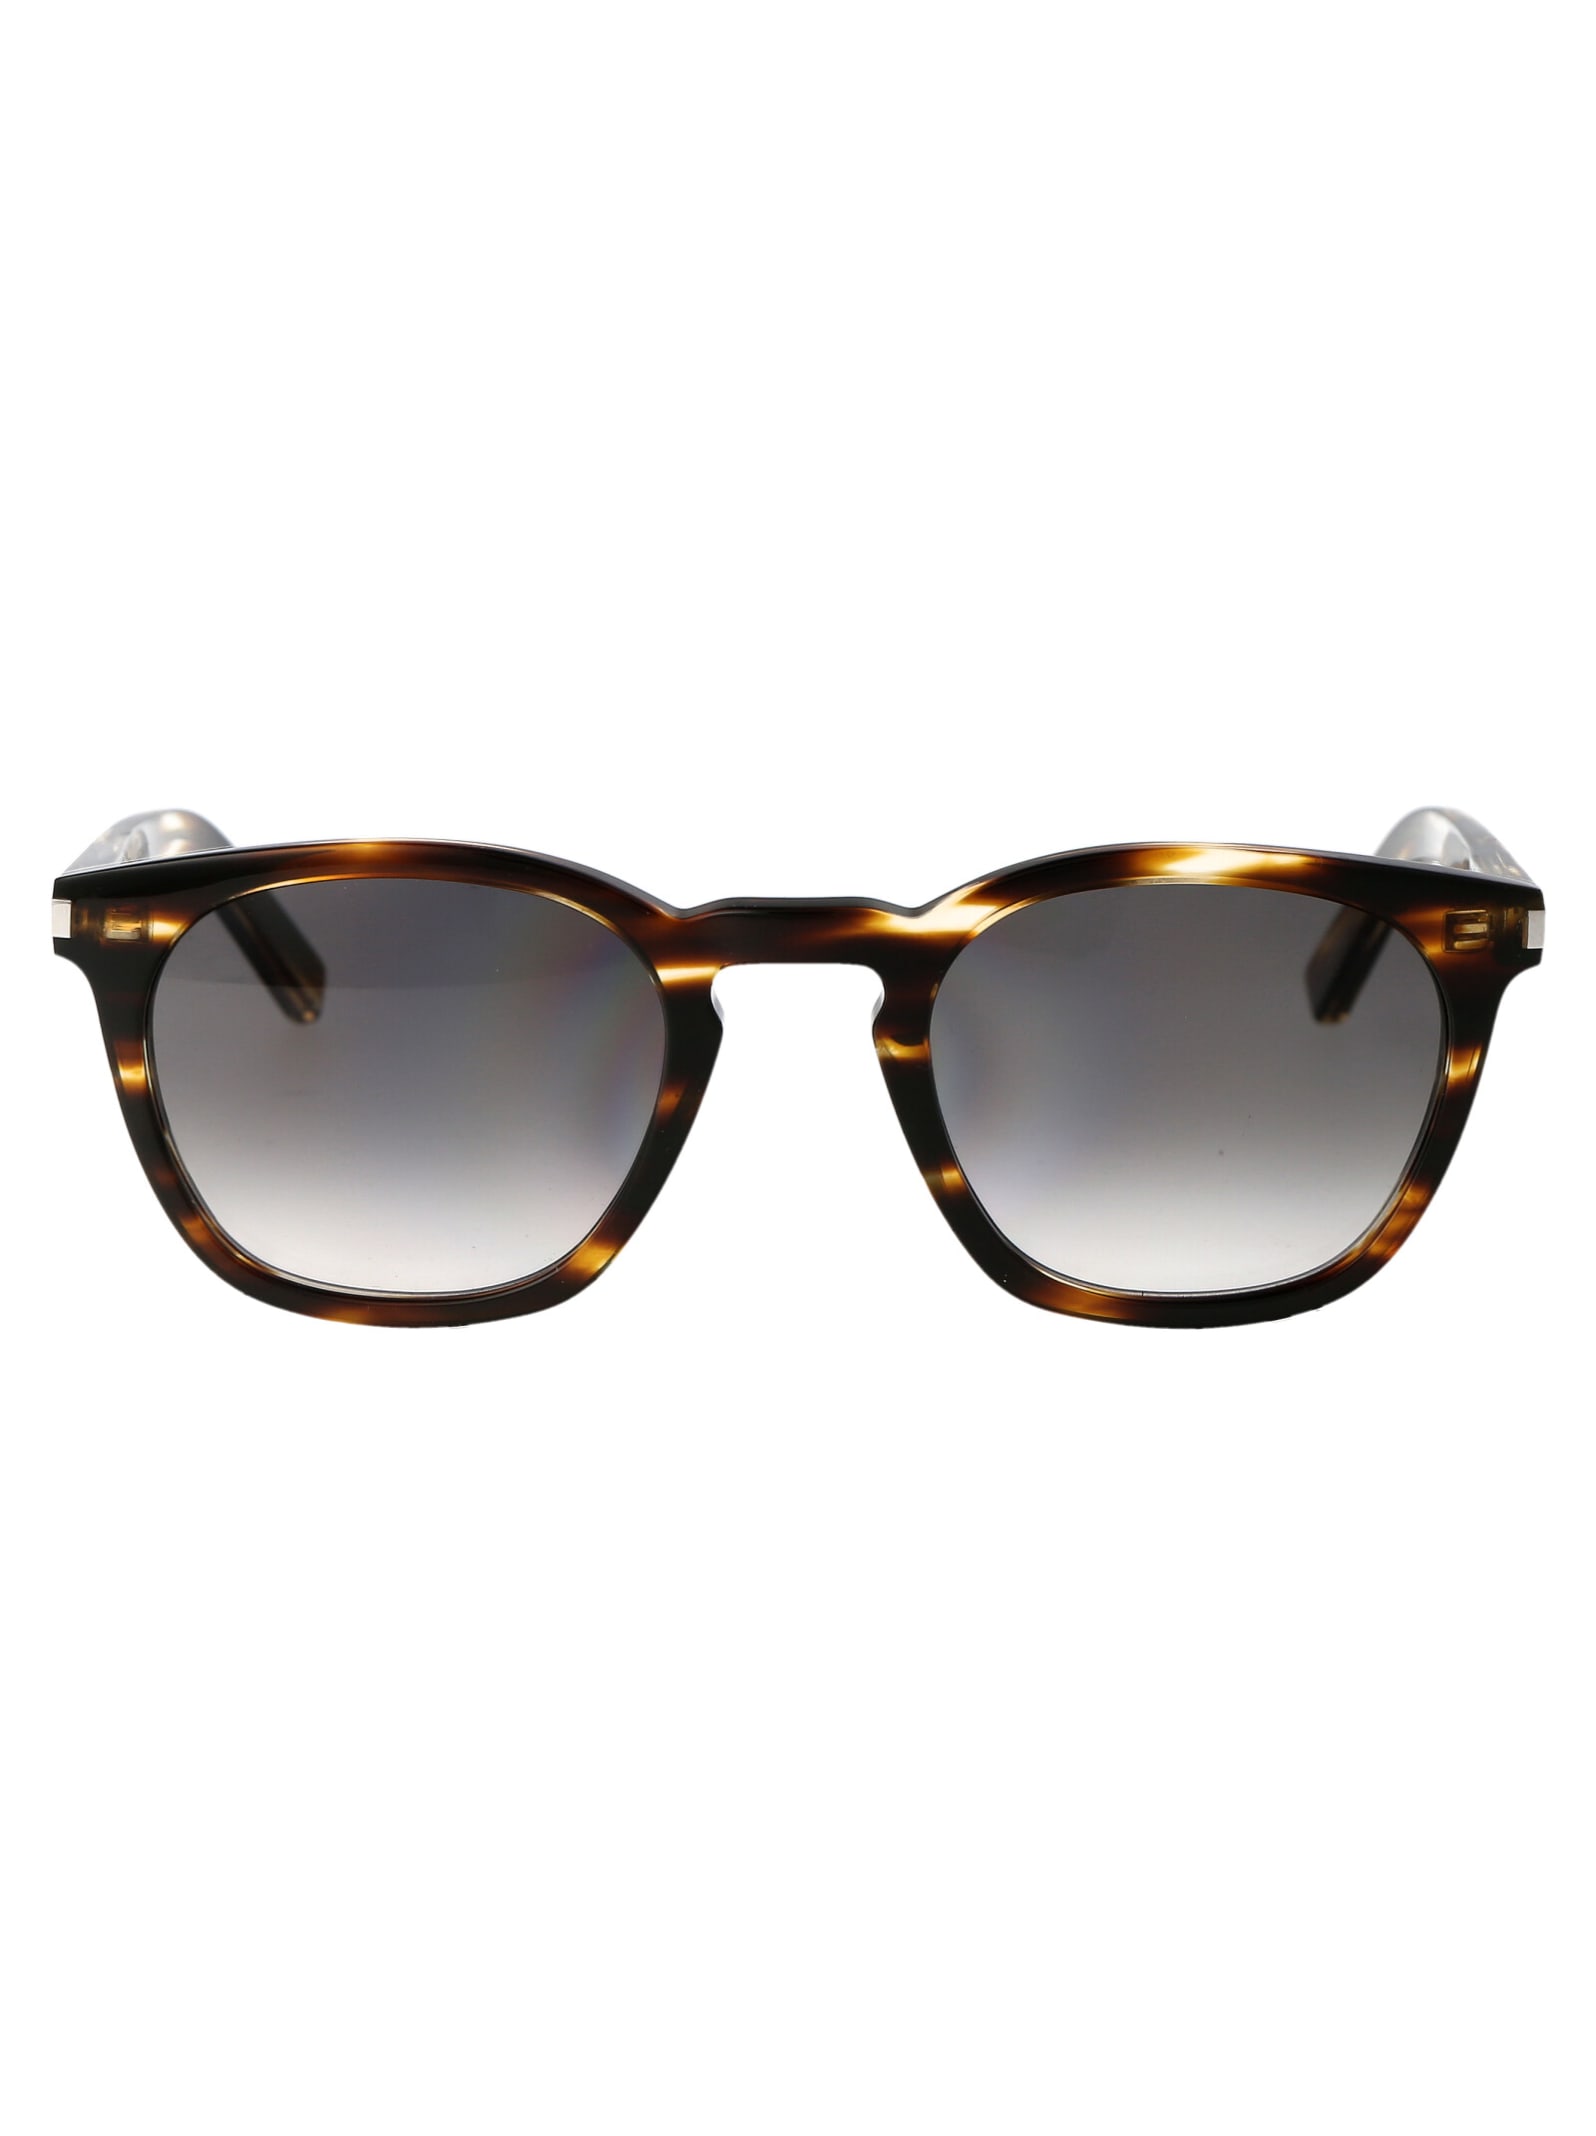 Saint Laurent Grey Cat Eye Ladies Sunglasses SL 28 002 49 889652002866 -  Sunglasses - Jomashop